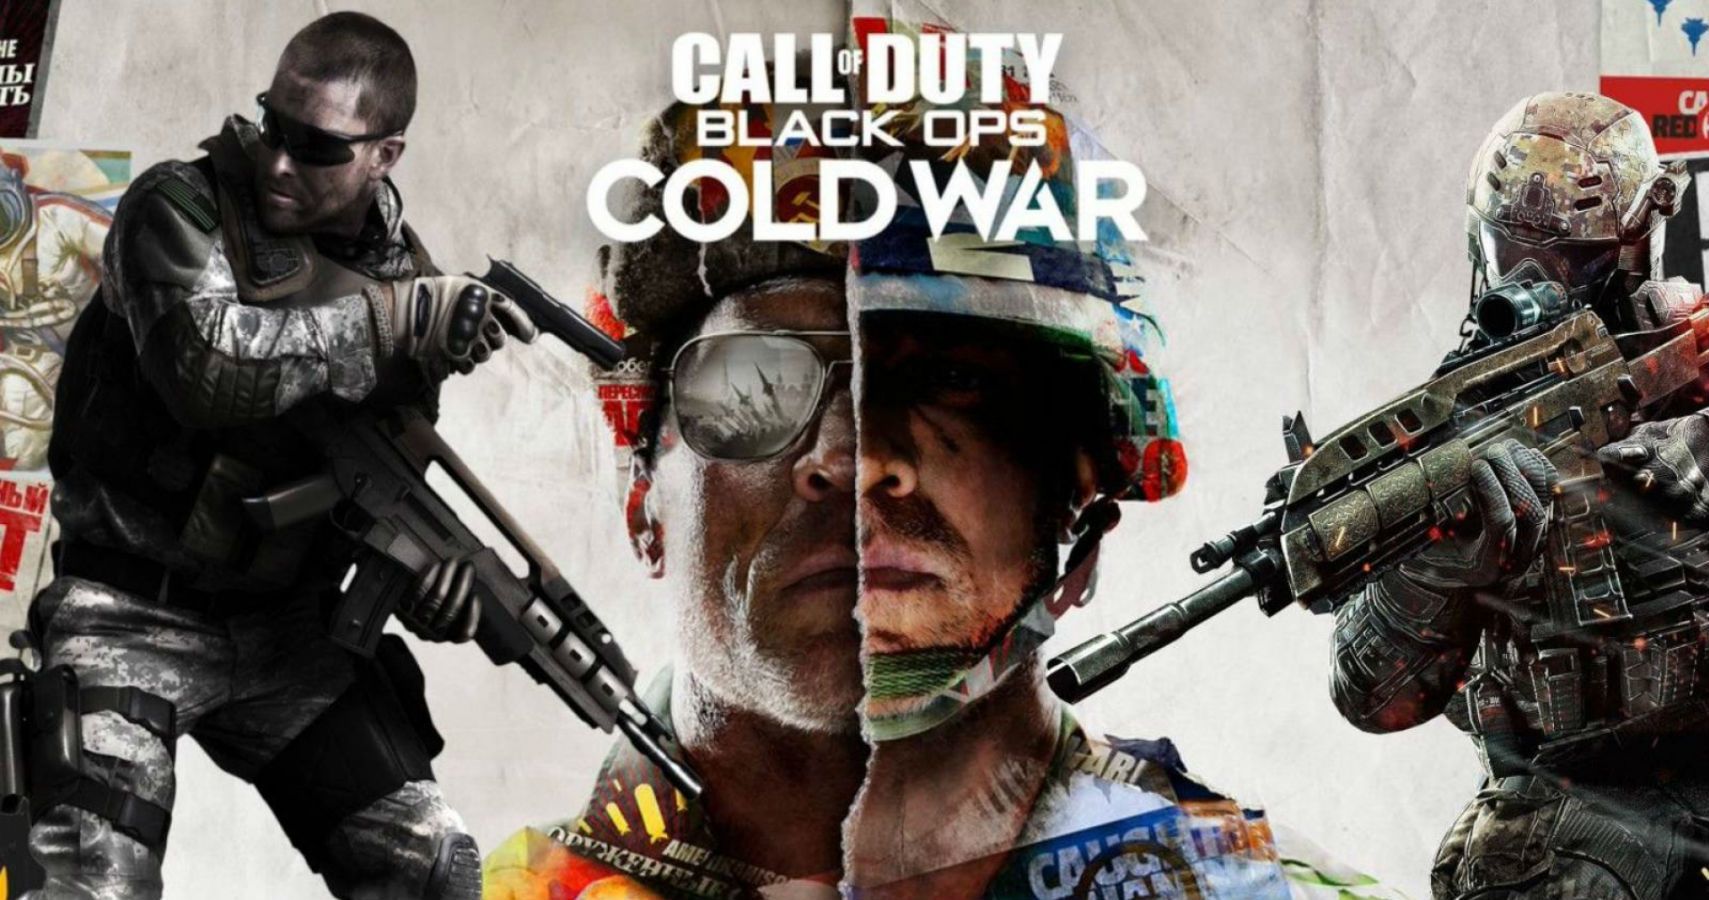 Call of duty black ops cold war pc download size external slimline cd dvd writer software download